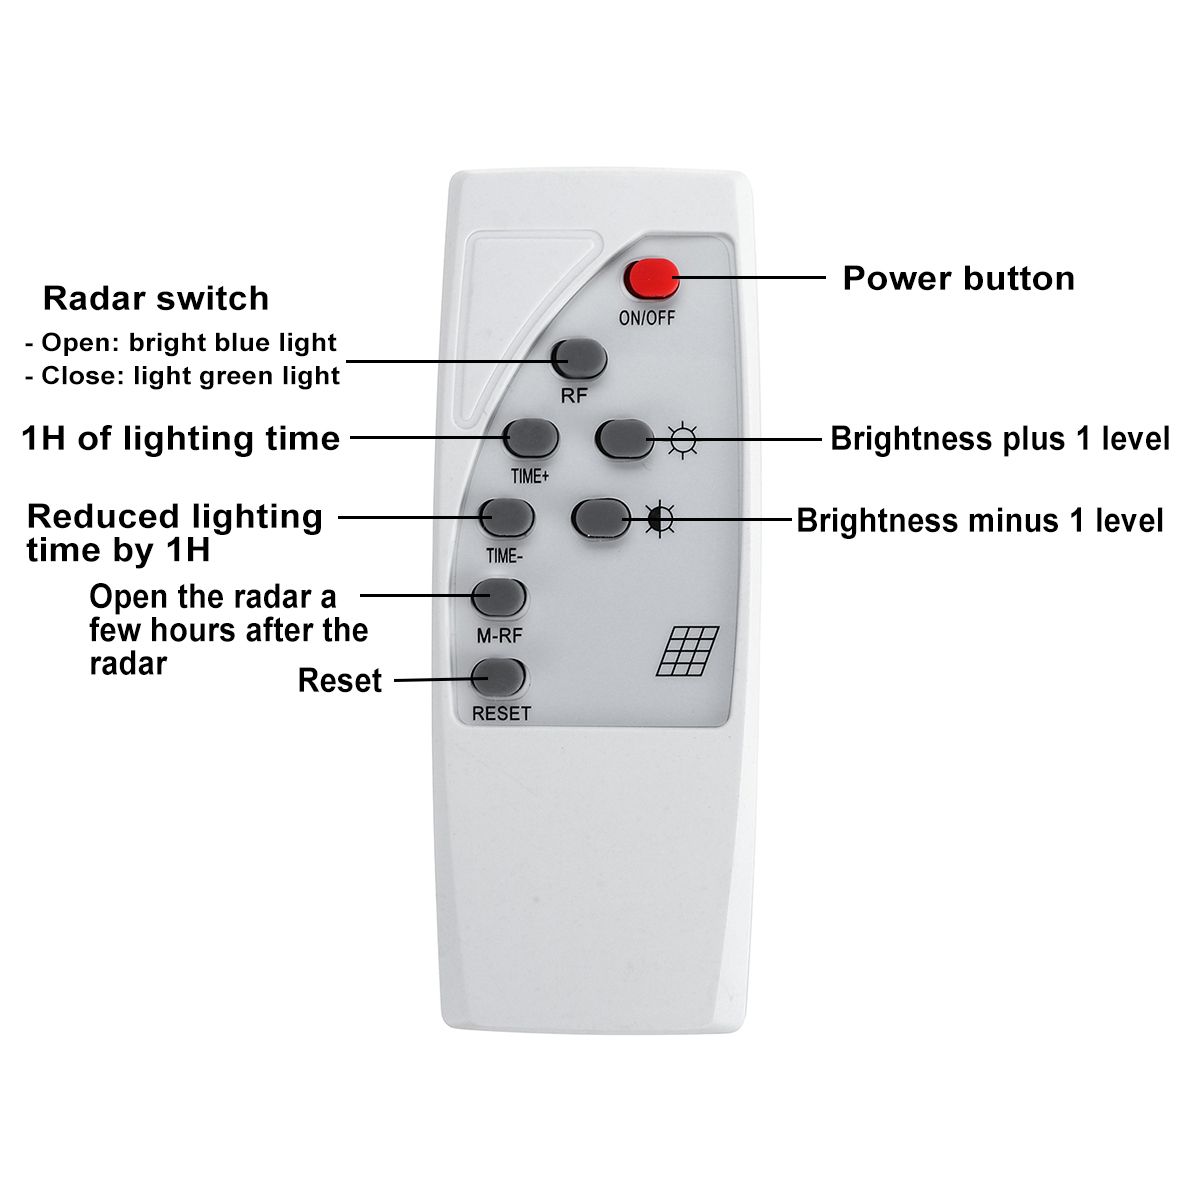 108216324LED-Solar-Street-Light-Motion-Sensor-Garden-Wall-Lamp-with-Remote-Controller-1621511